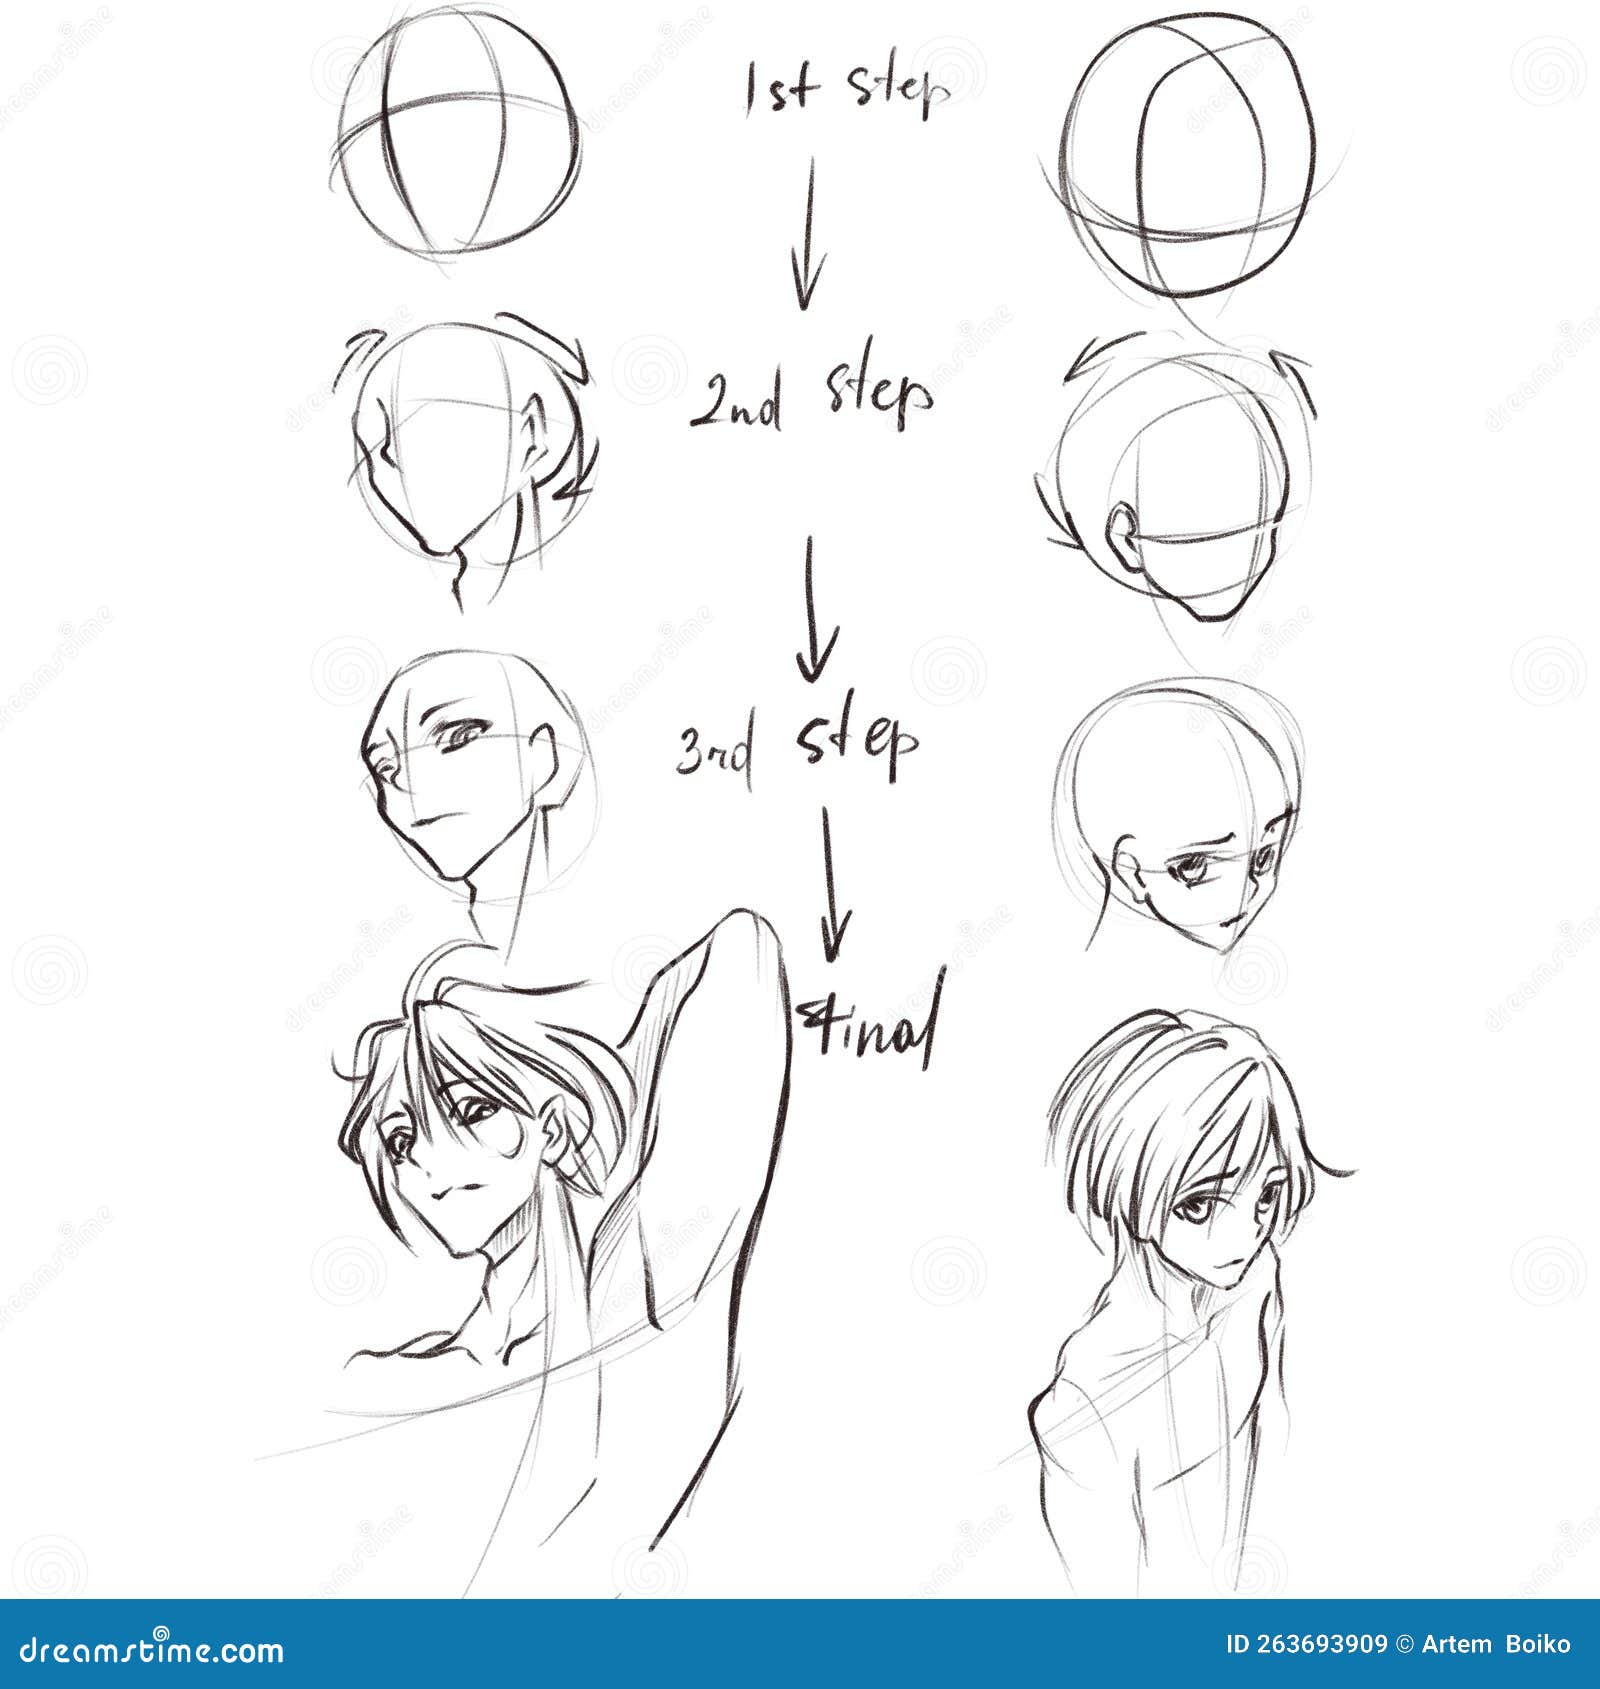 How To Draw Anime Poses - Anime Girl | Storiespub